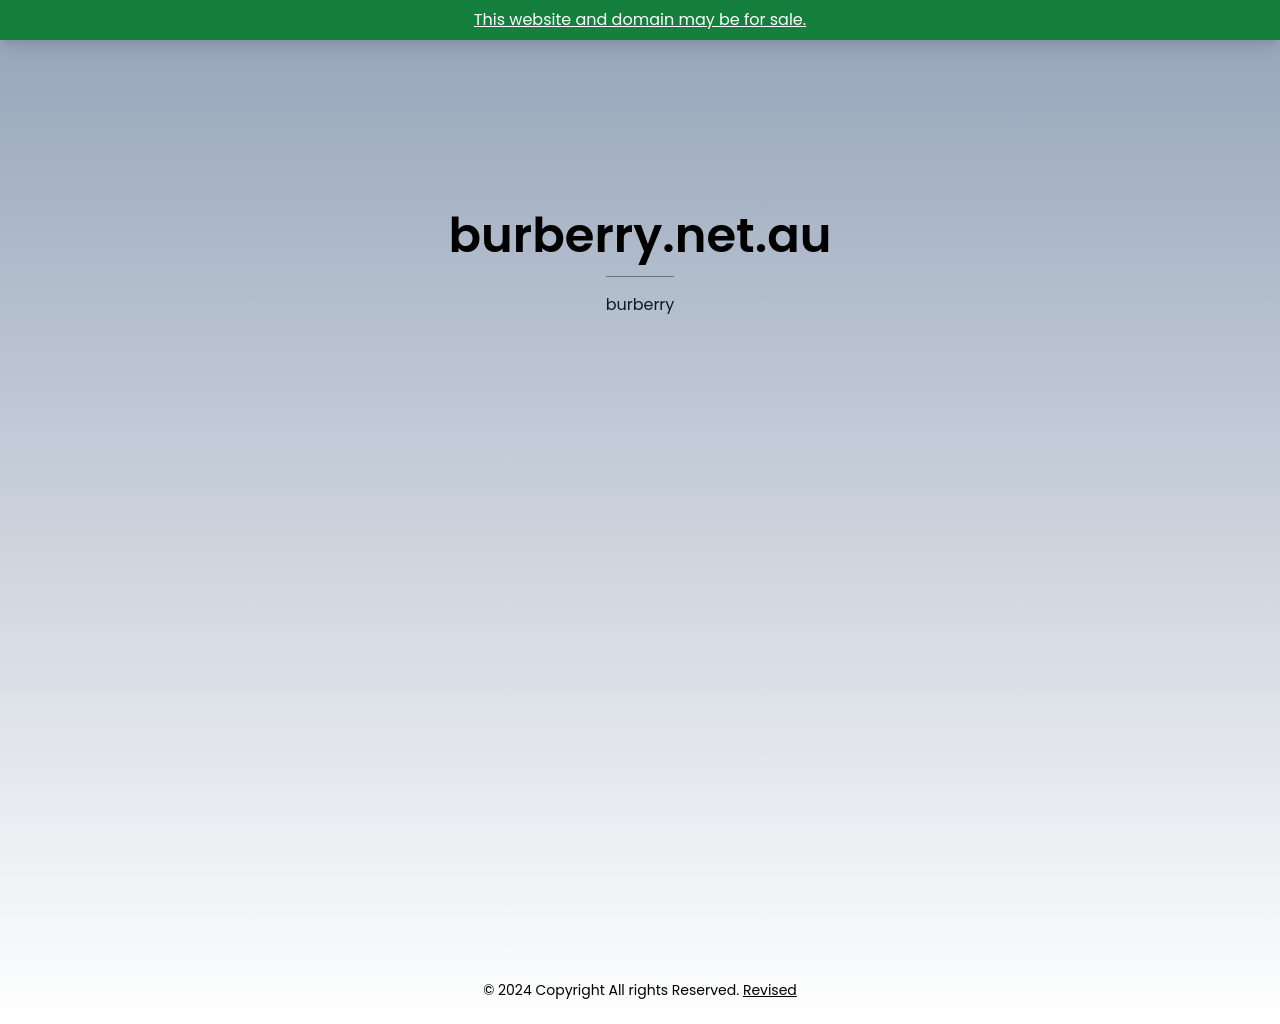 burberry.net.au